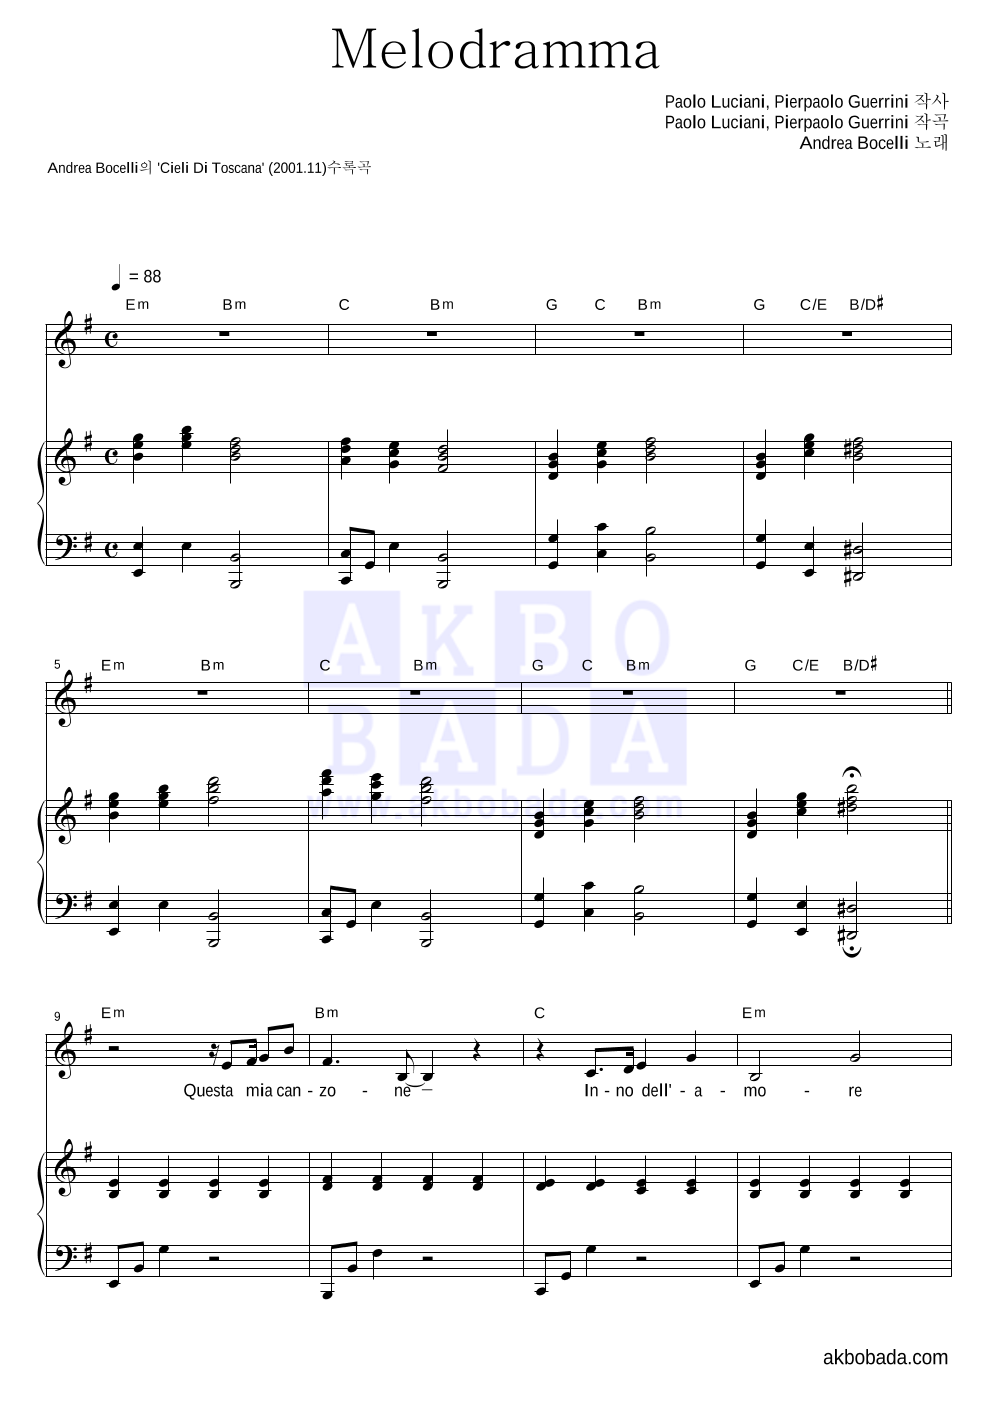 Andrea Bocelli - Melodramma 피아노 3단 악보 